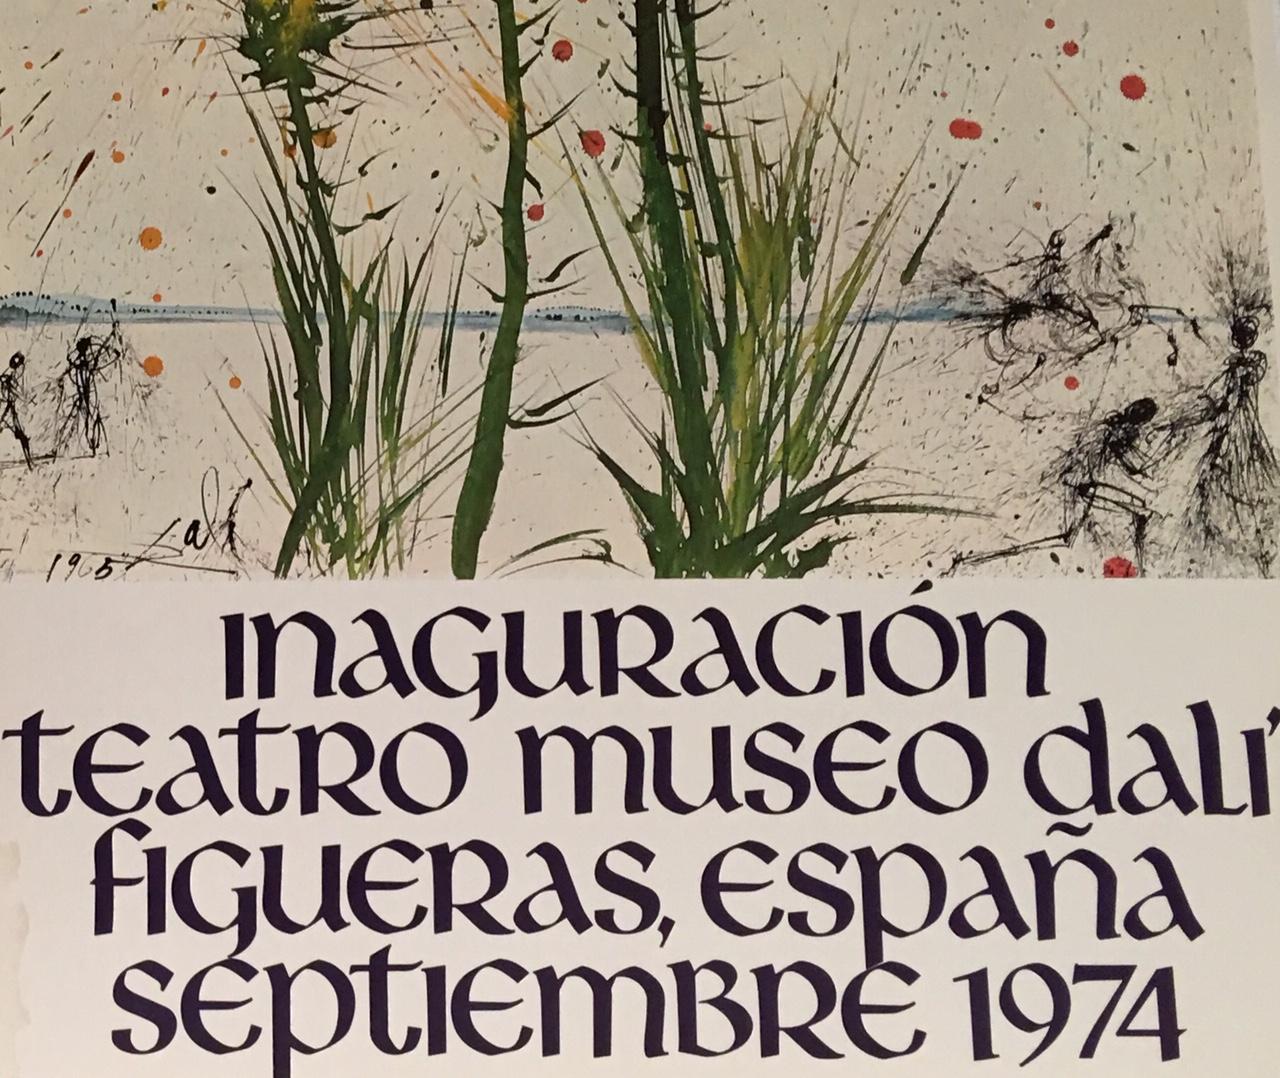 Inaguracion Teatro Museo Dali Figueras, Espana Septienbre 1974 - Brown Landscape Print by (after) Salvador Dali